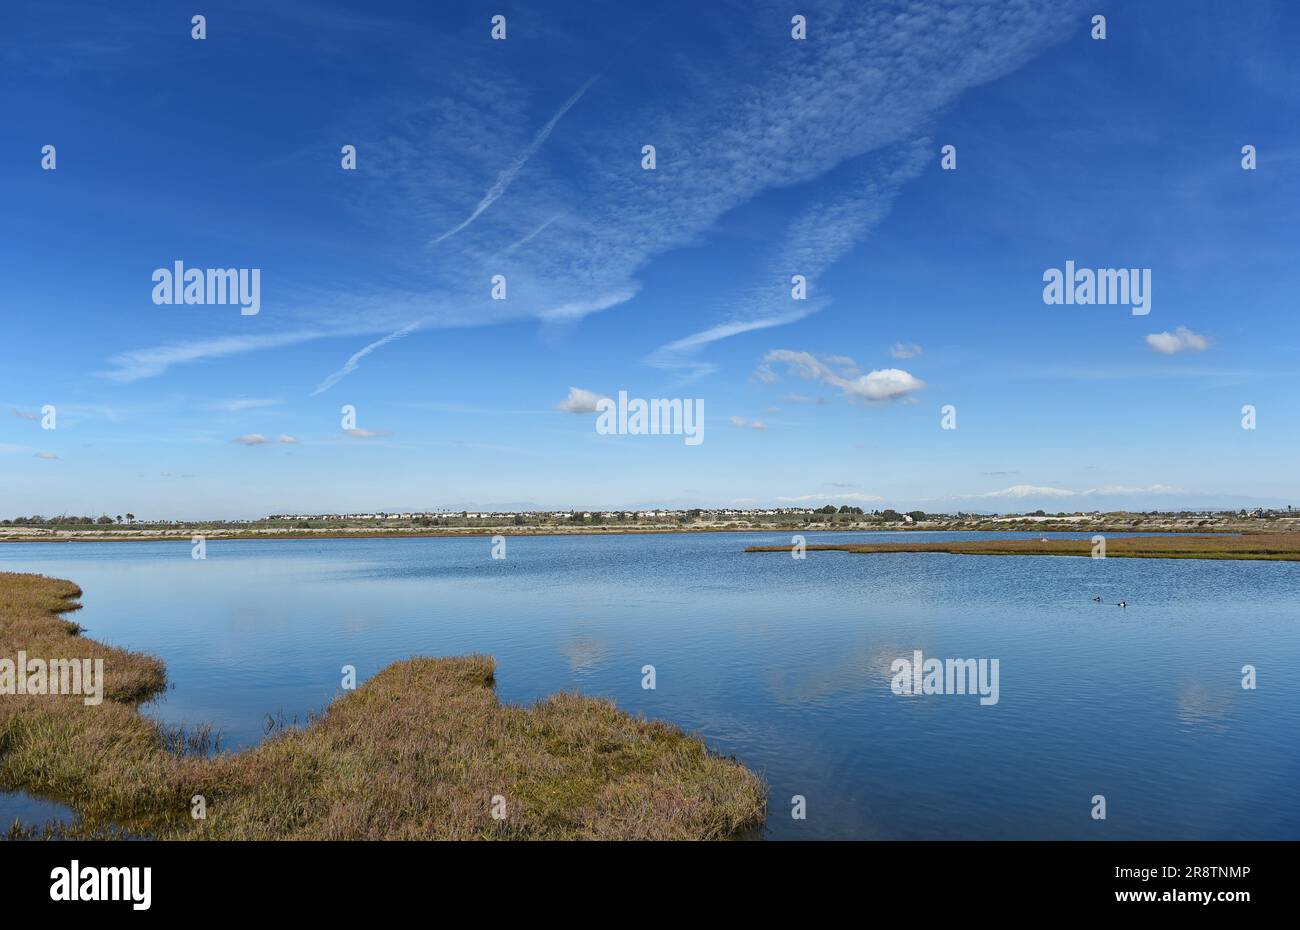 Marsh grasses at the Bolsa Chica Wetlands in Huntington Beach, California, with a cloud streaked blue sky. Stock Photo